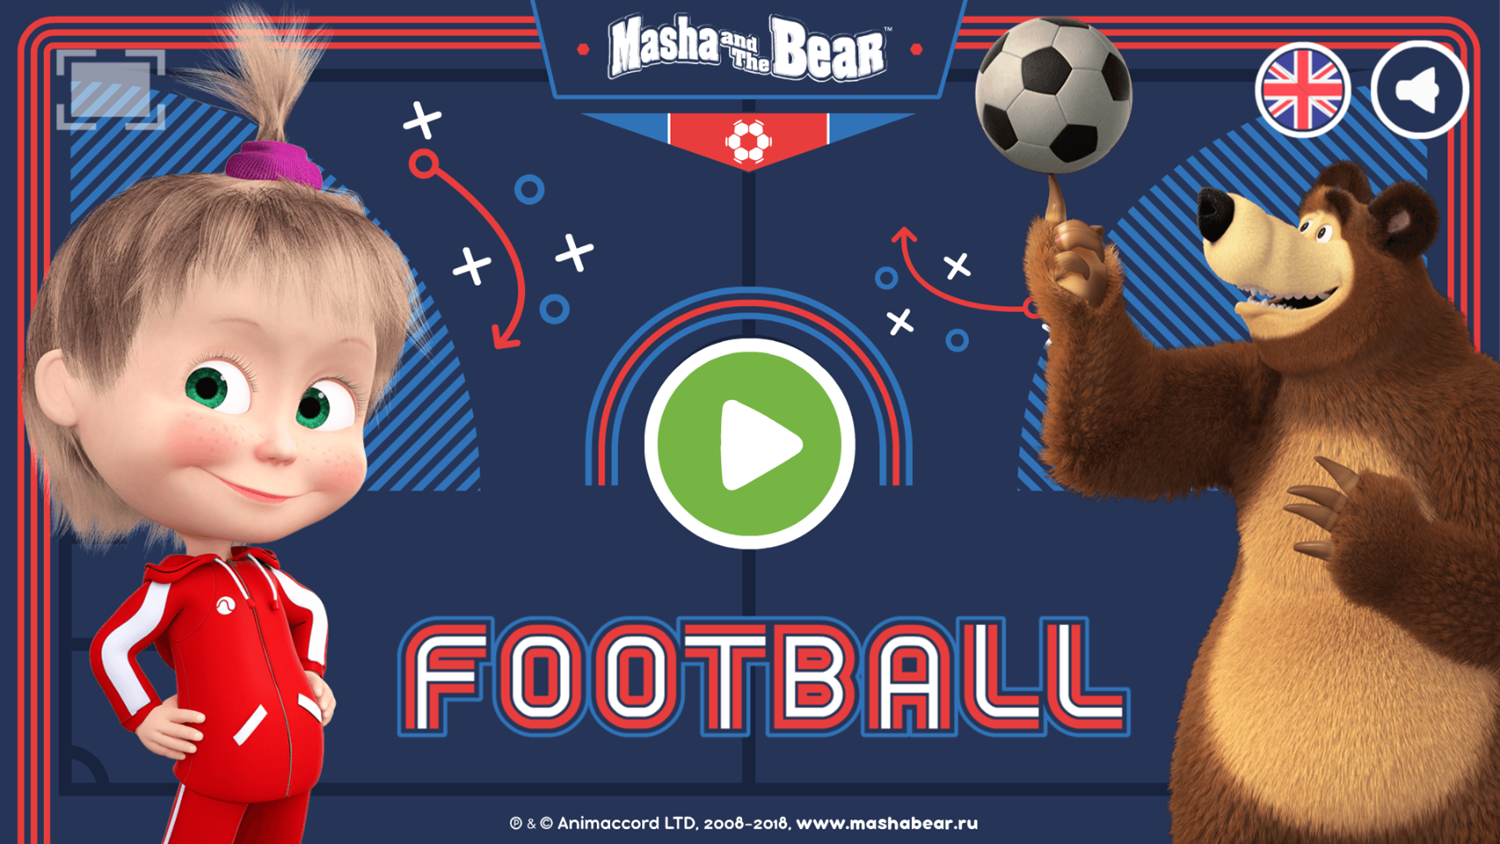 Masha and the Bear Football Game Welcome Screen Screenshot.